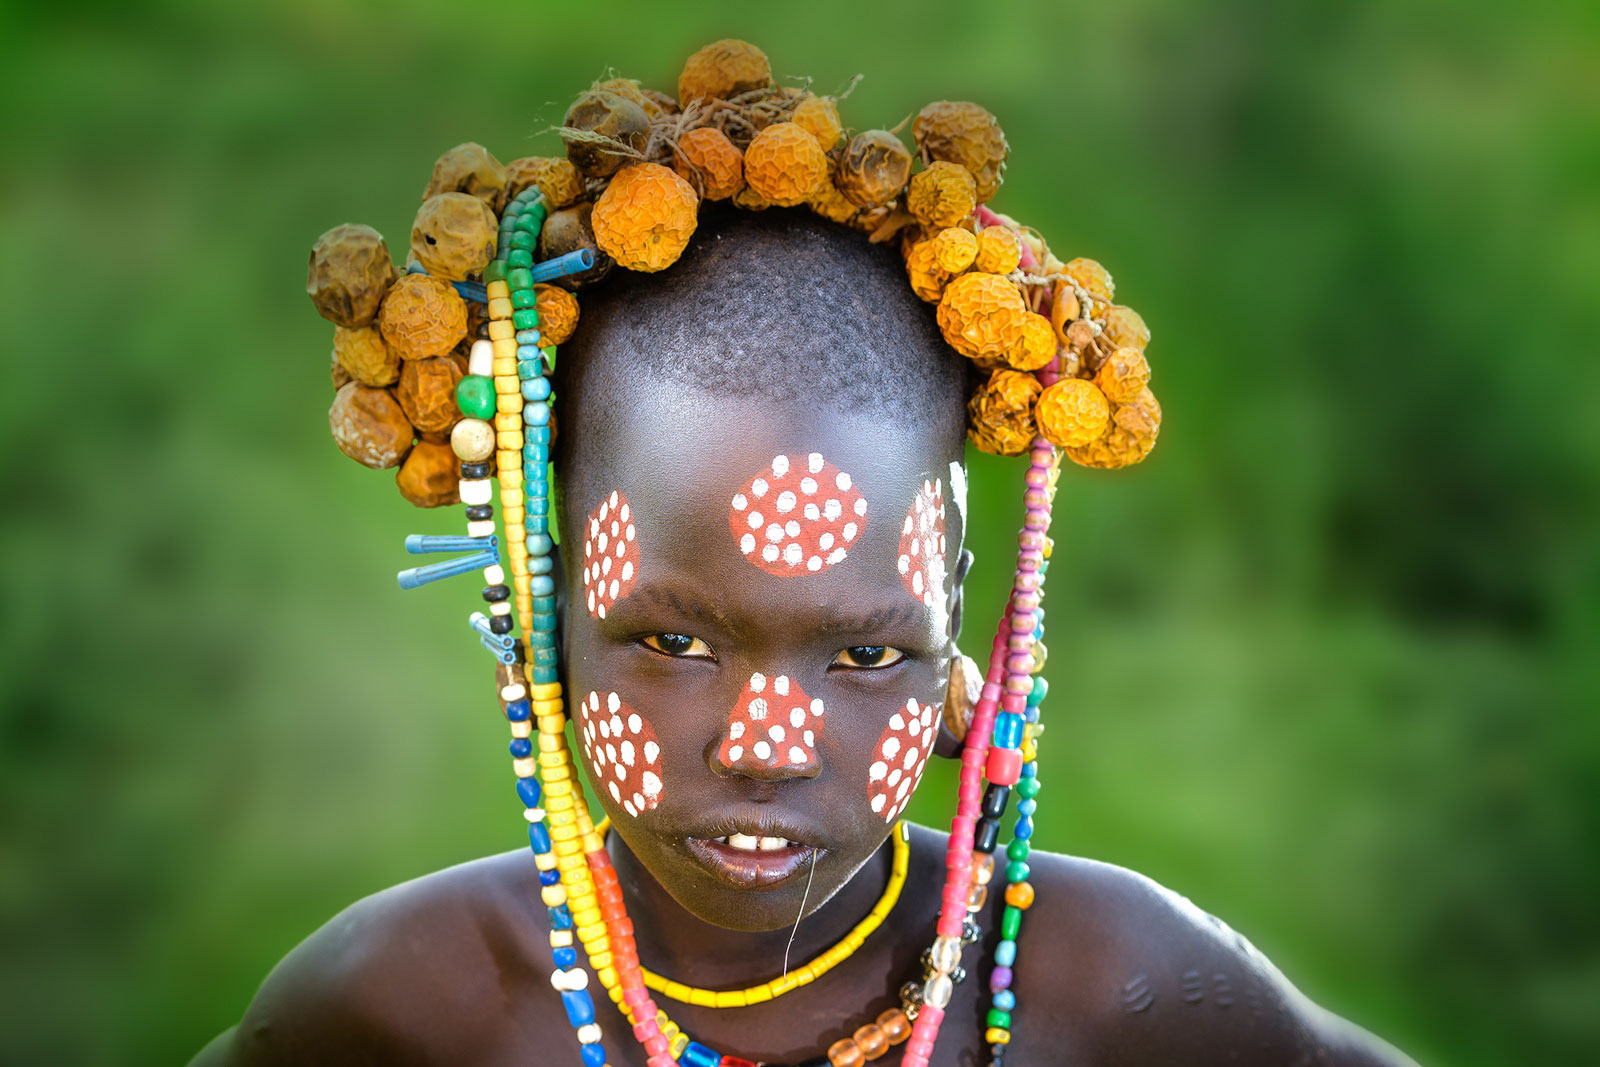 ETH_Cultural-Portraits-Alex-Mursi-Girl-©-Dinkesh-Ethiopia-Tours.jpg